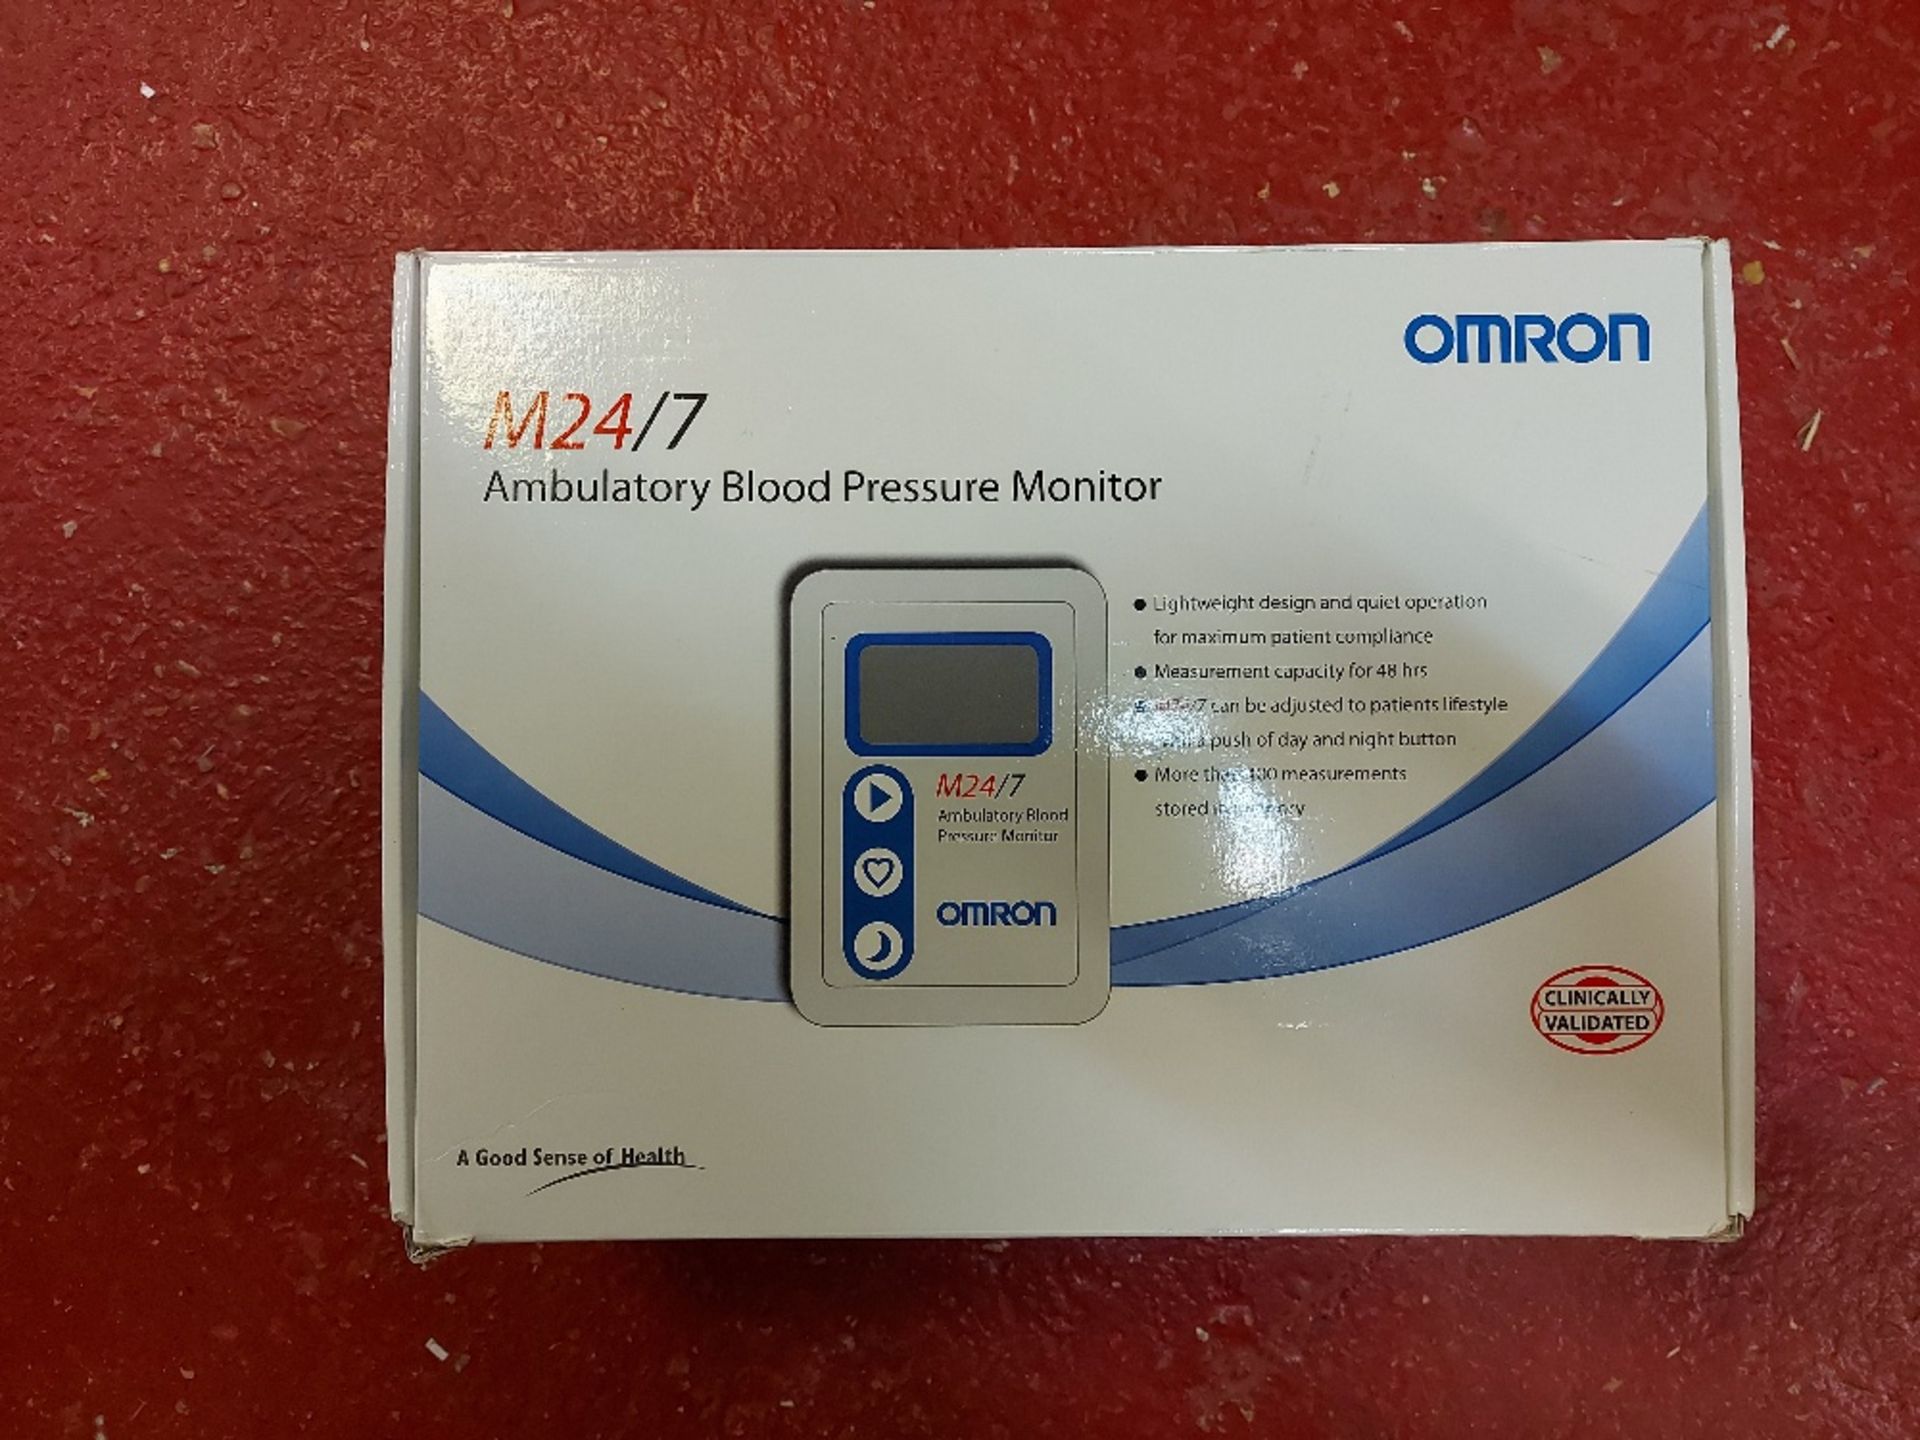 Omron M24/7 Ambulatory Blood Pressure Monitor - Image 4 of 4